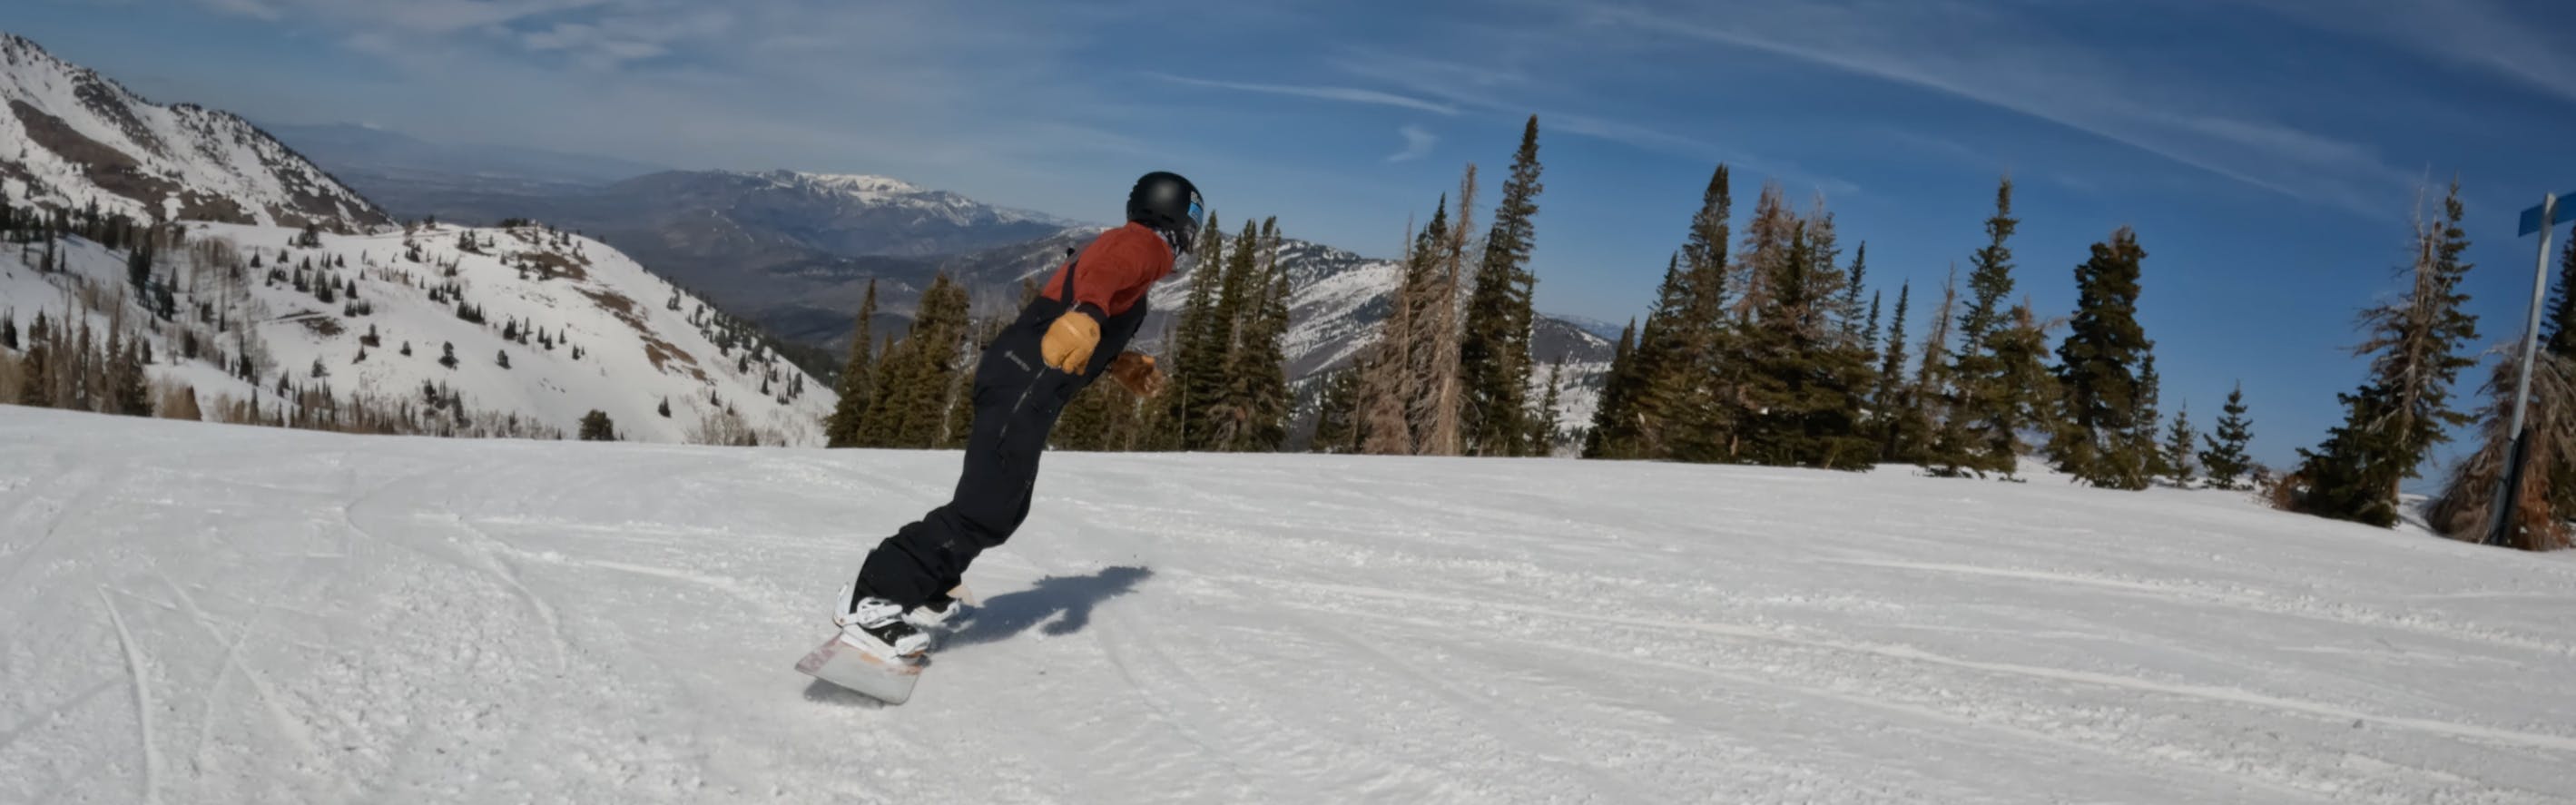 A snowboarder riding the Roxy Breeze Snowboard.